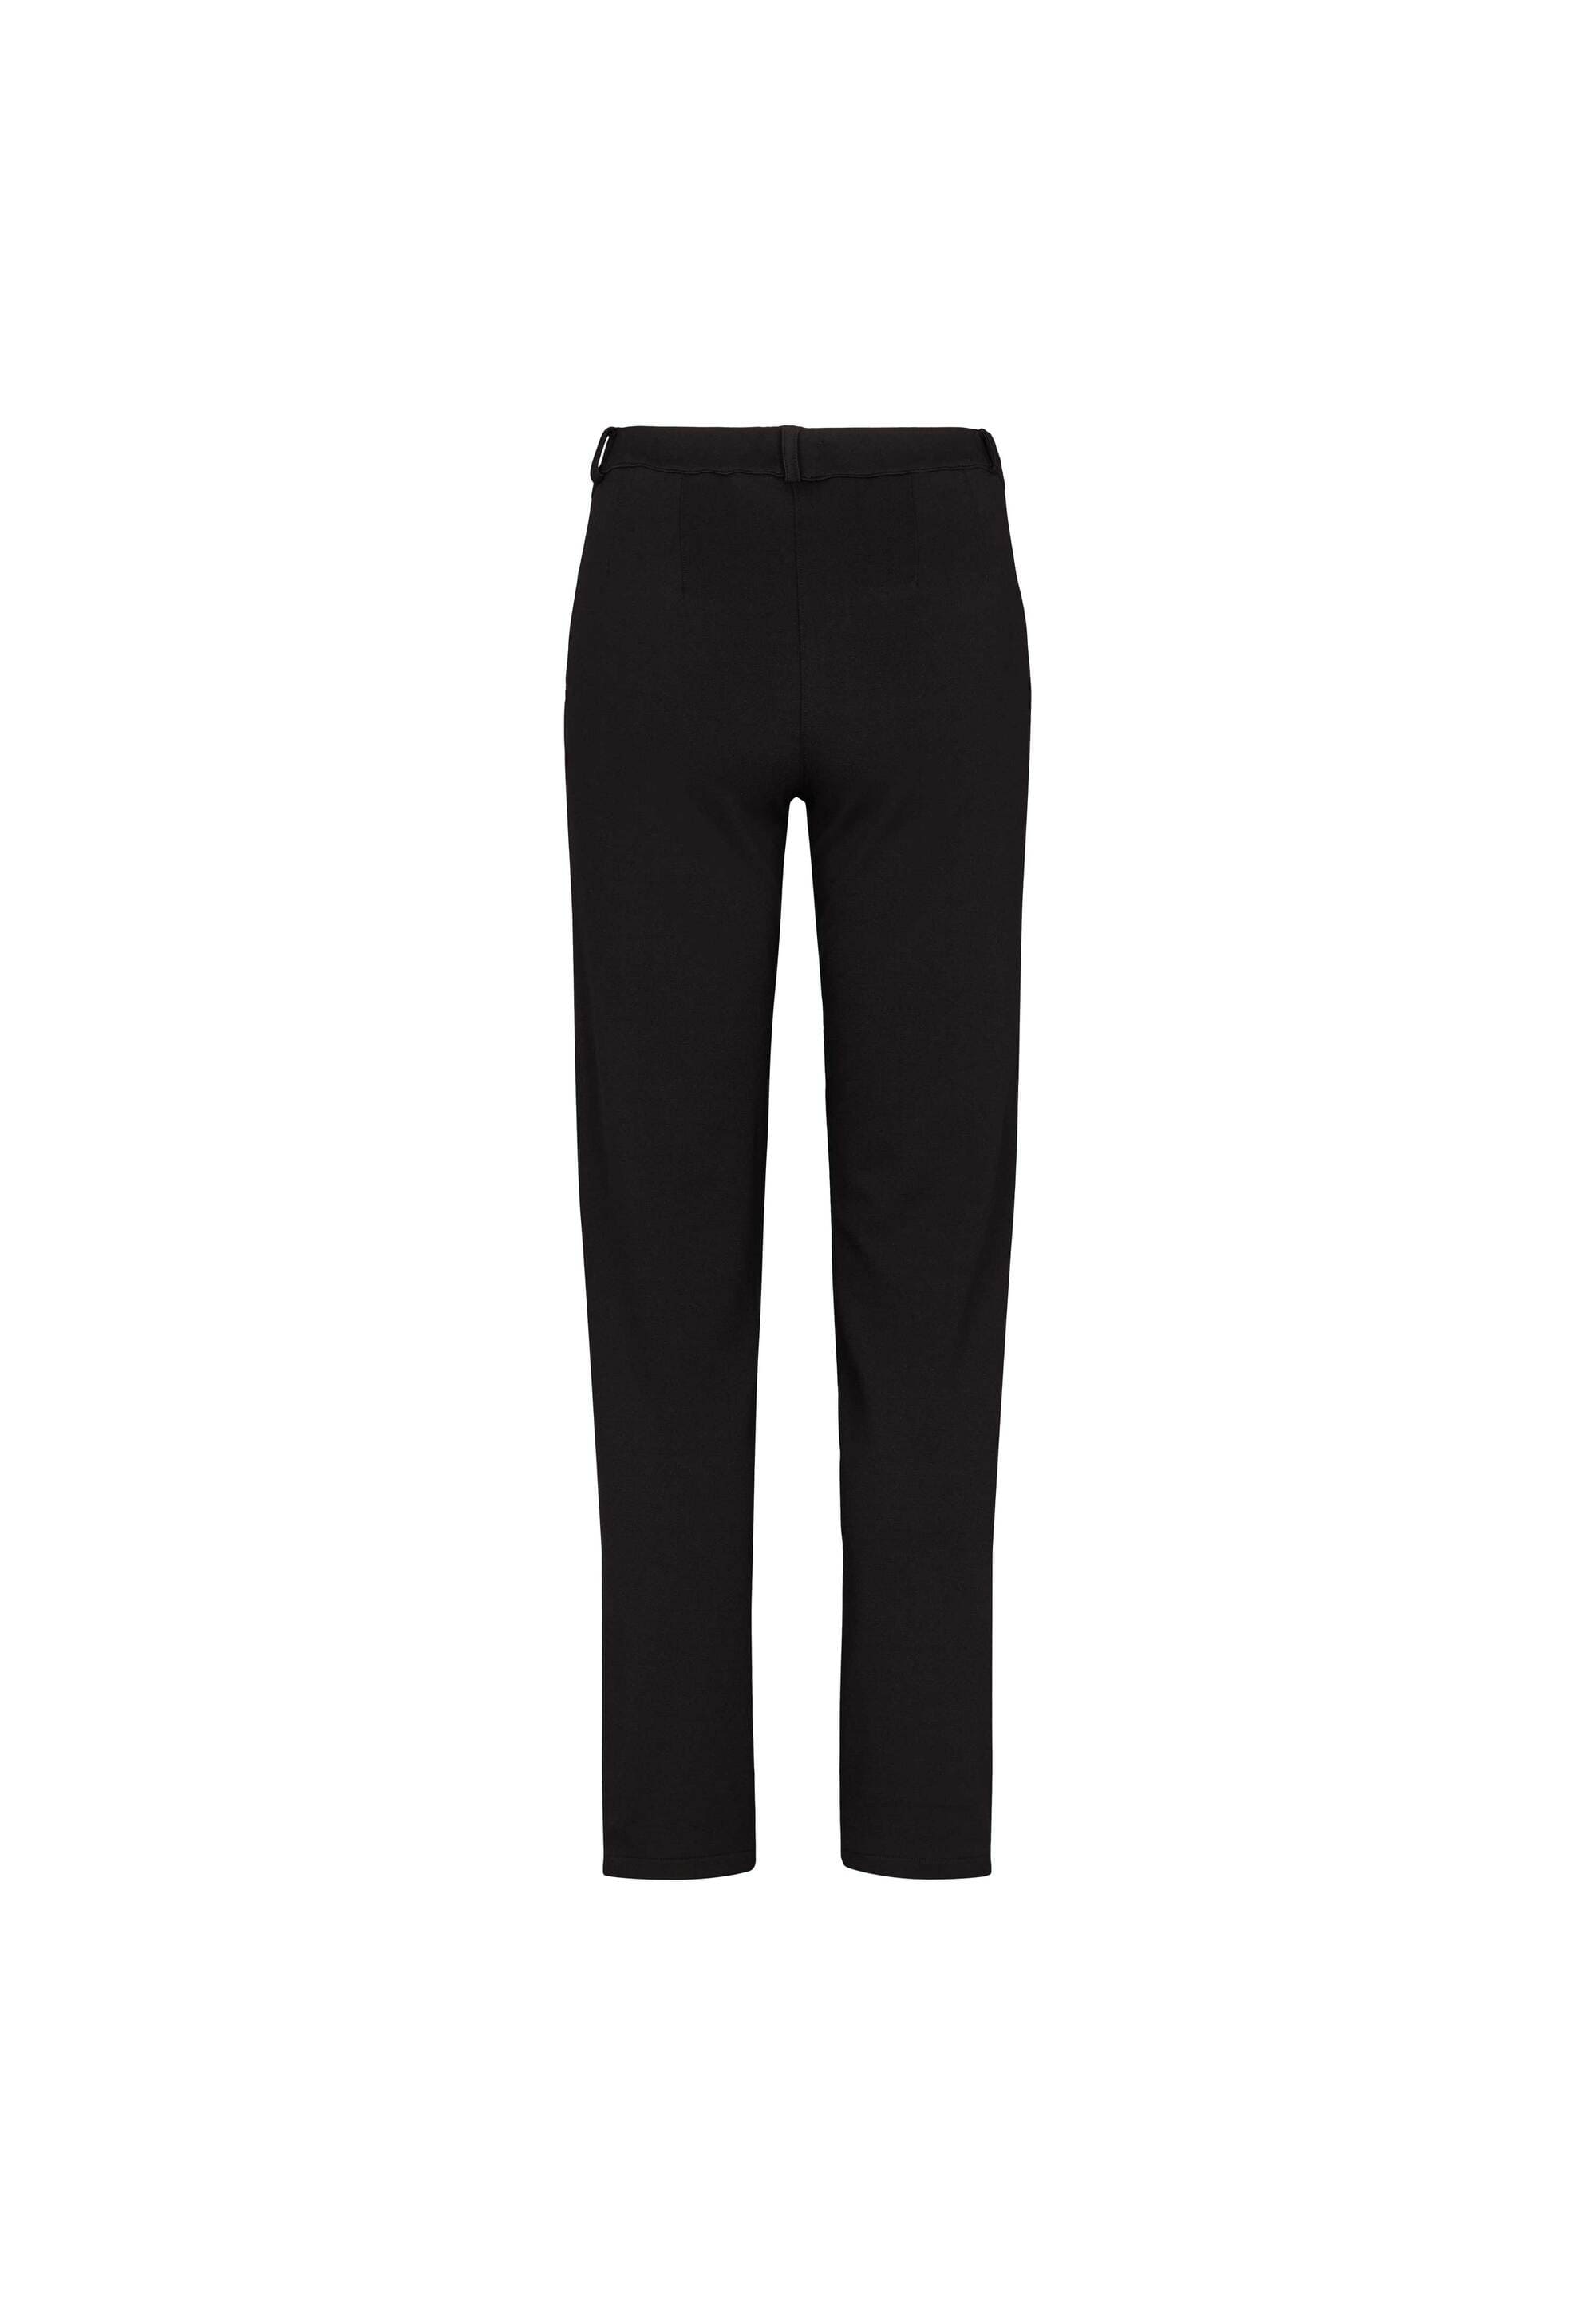 LAURIE  Rylie Regular - Short Length Trousers REGULAR 99143 Black brushed